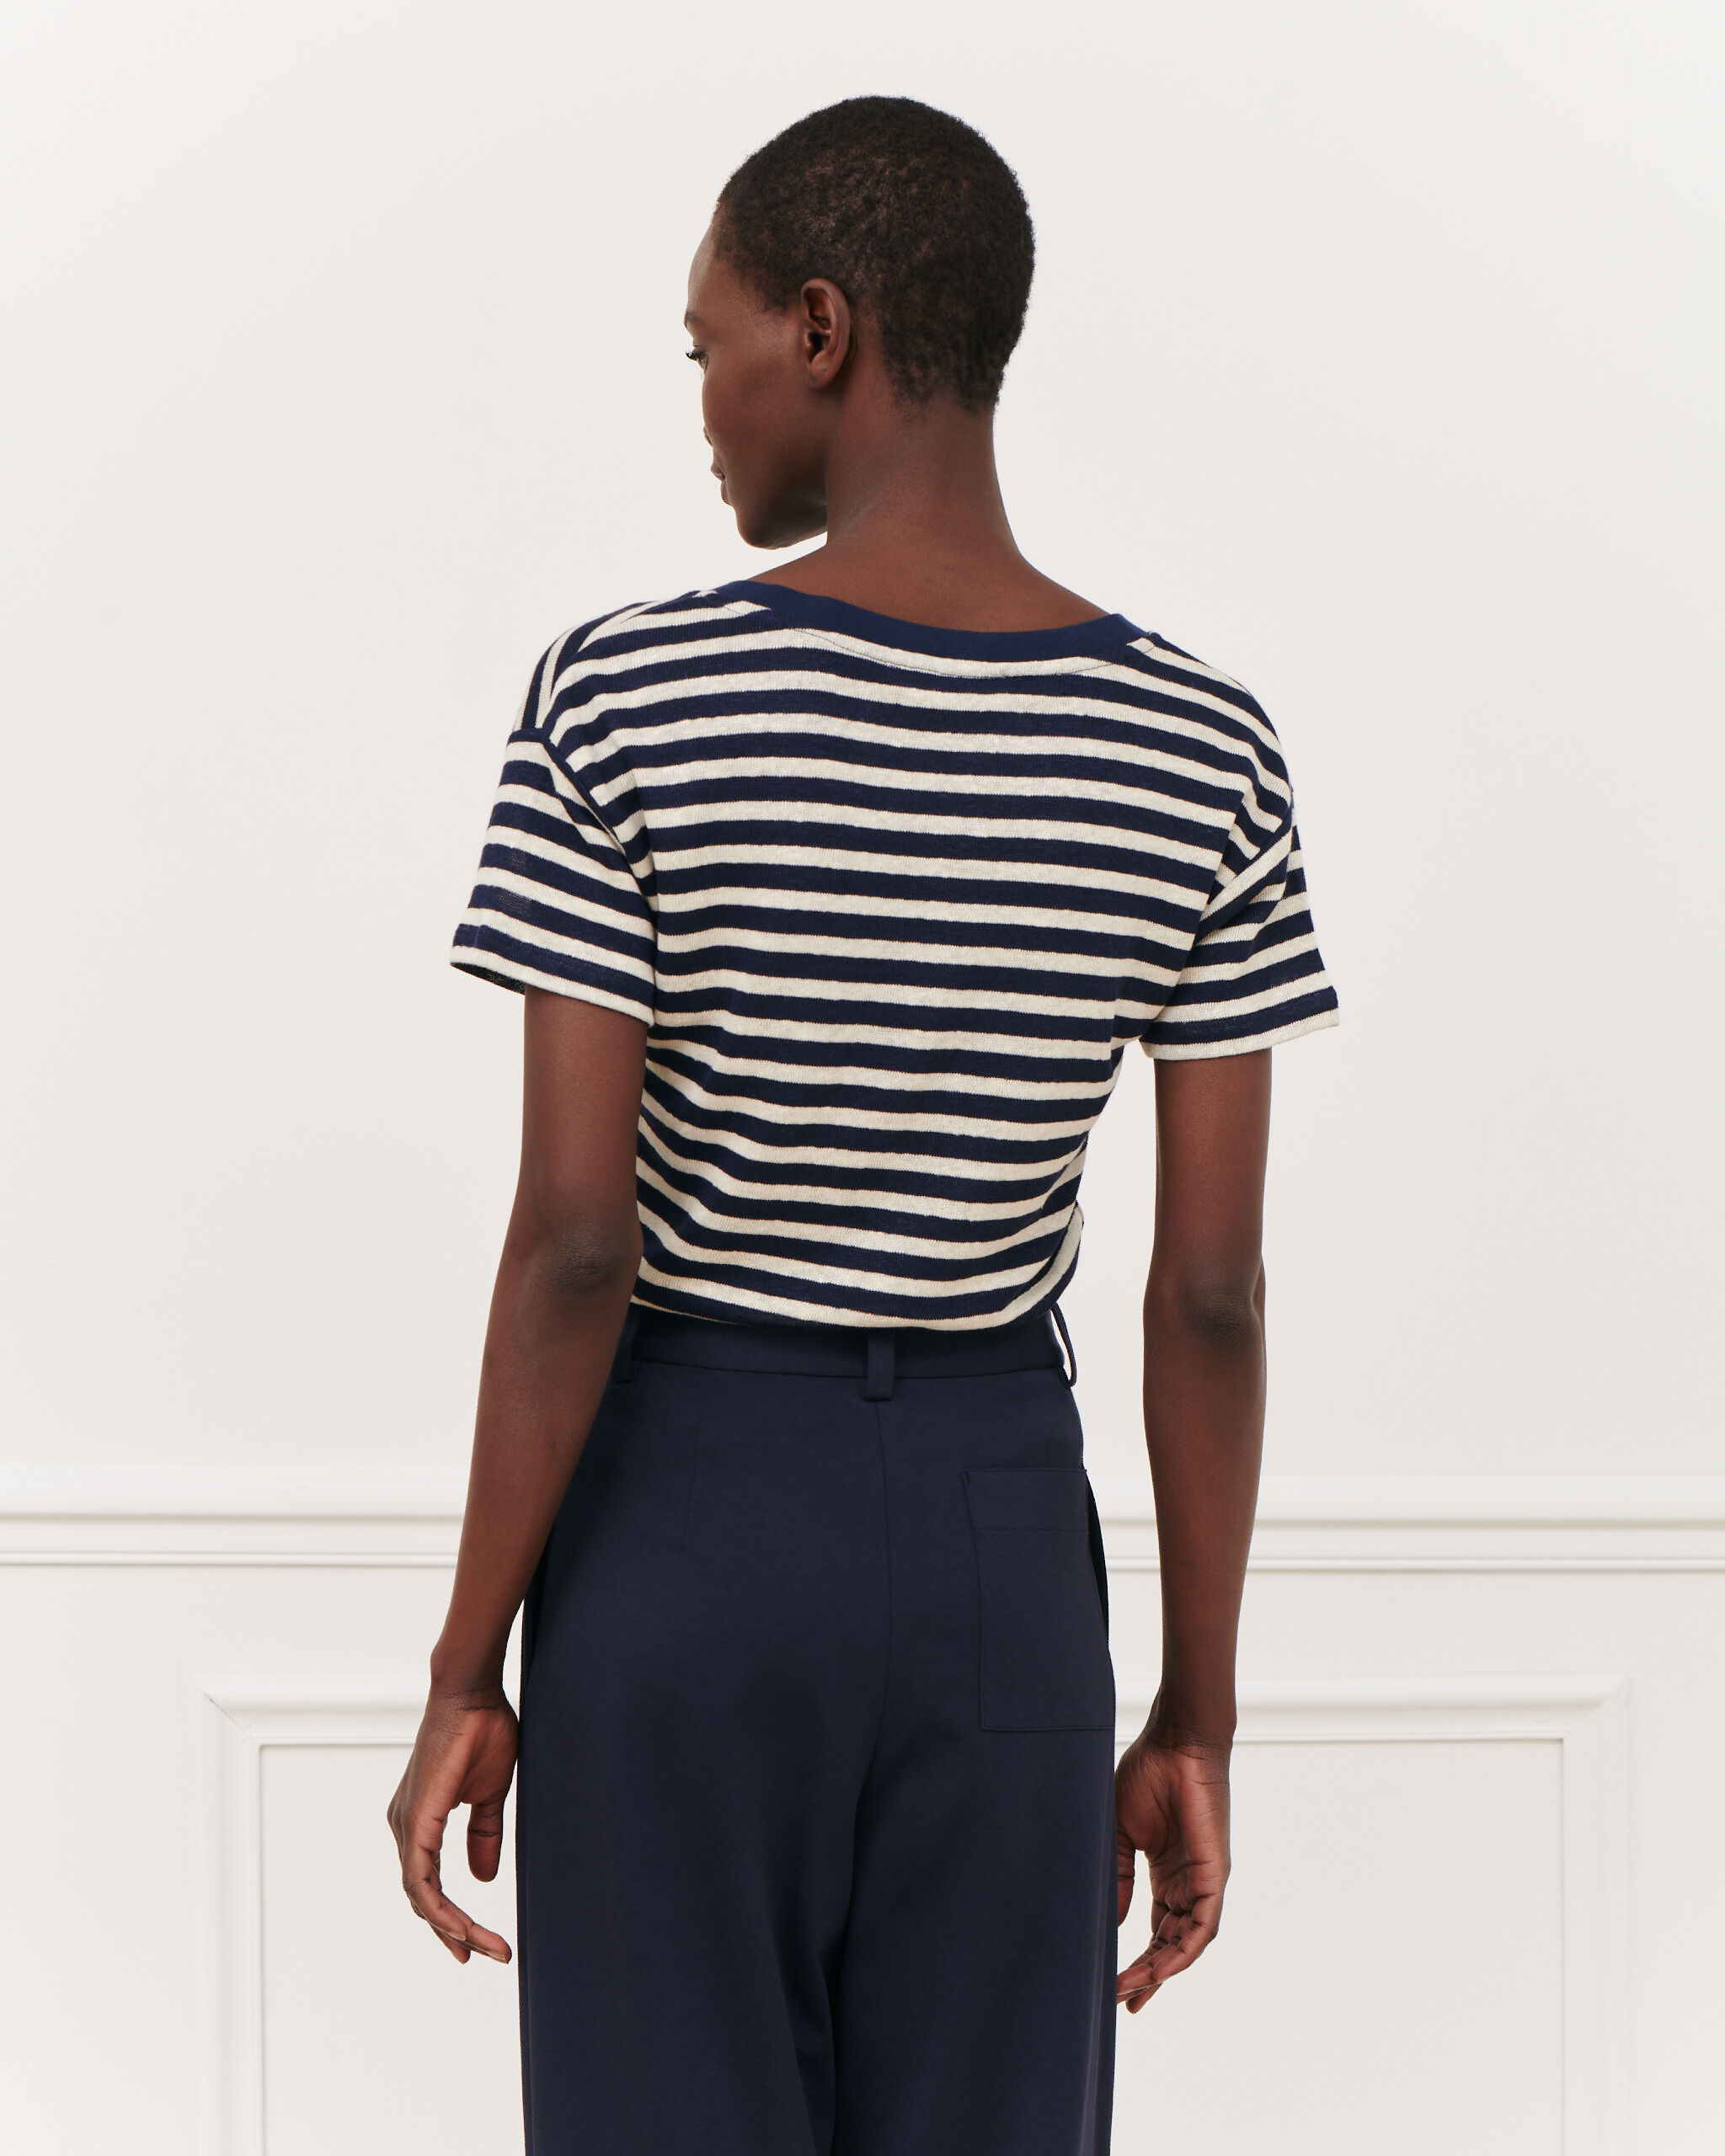 SARAH - Camiseta de lino con cuello de pico 123 stripes heather 2ste620f05